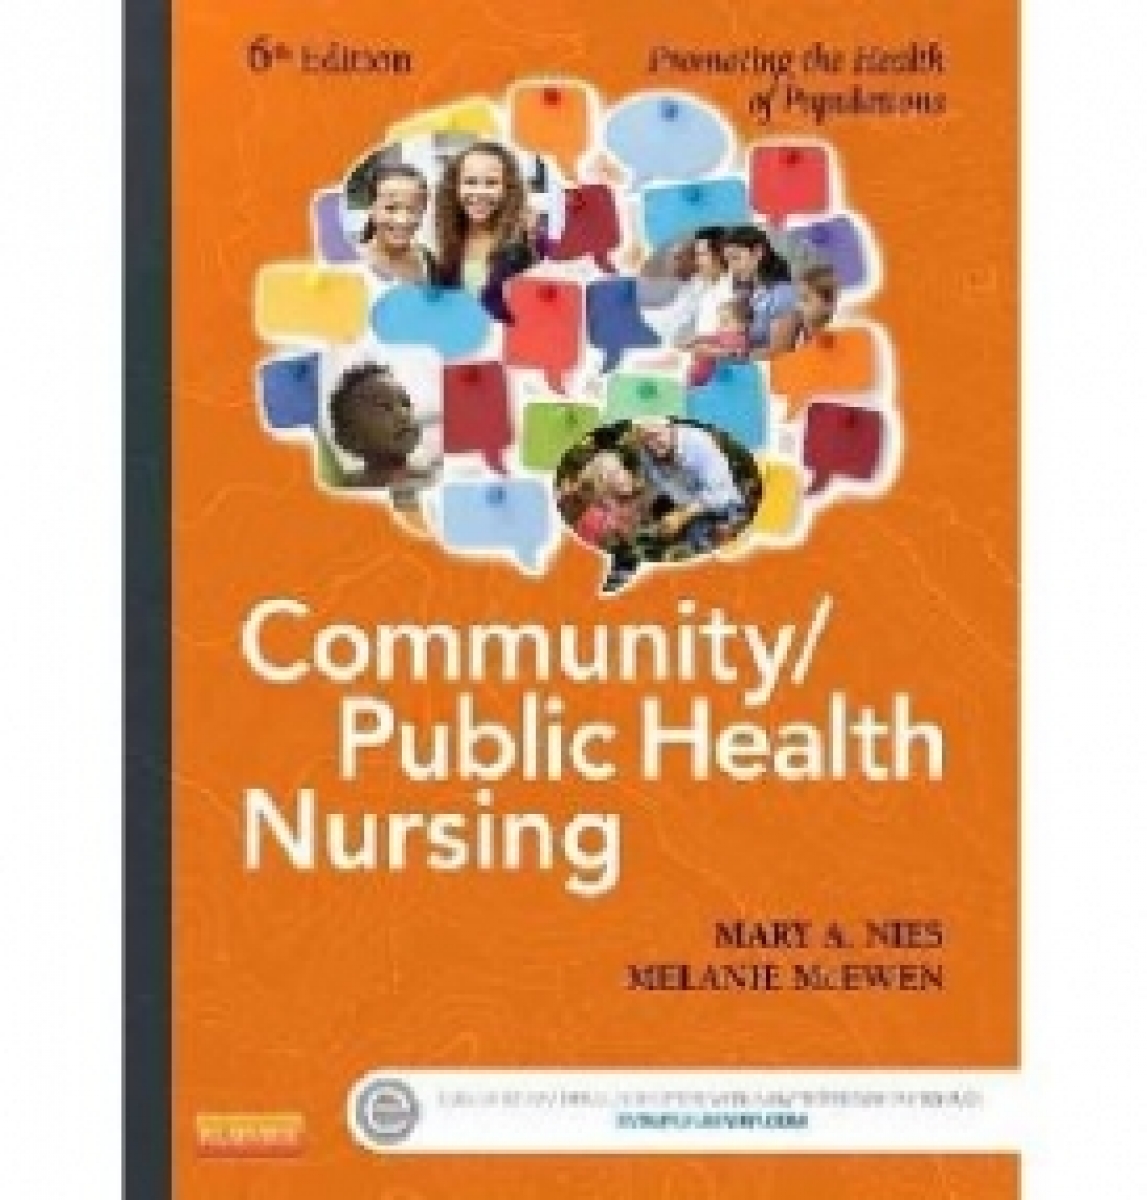 Nies Mary A., McEwen Melanie Community/Public Health Nursing: Promoting the Health of Populations, 6 ed. 